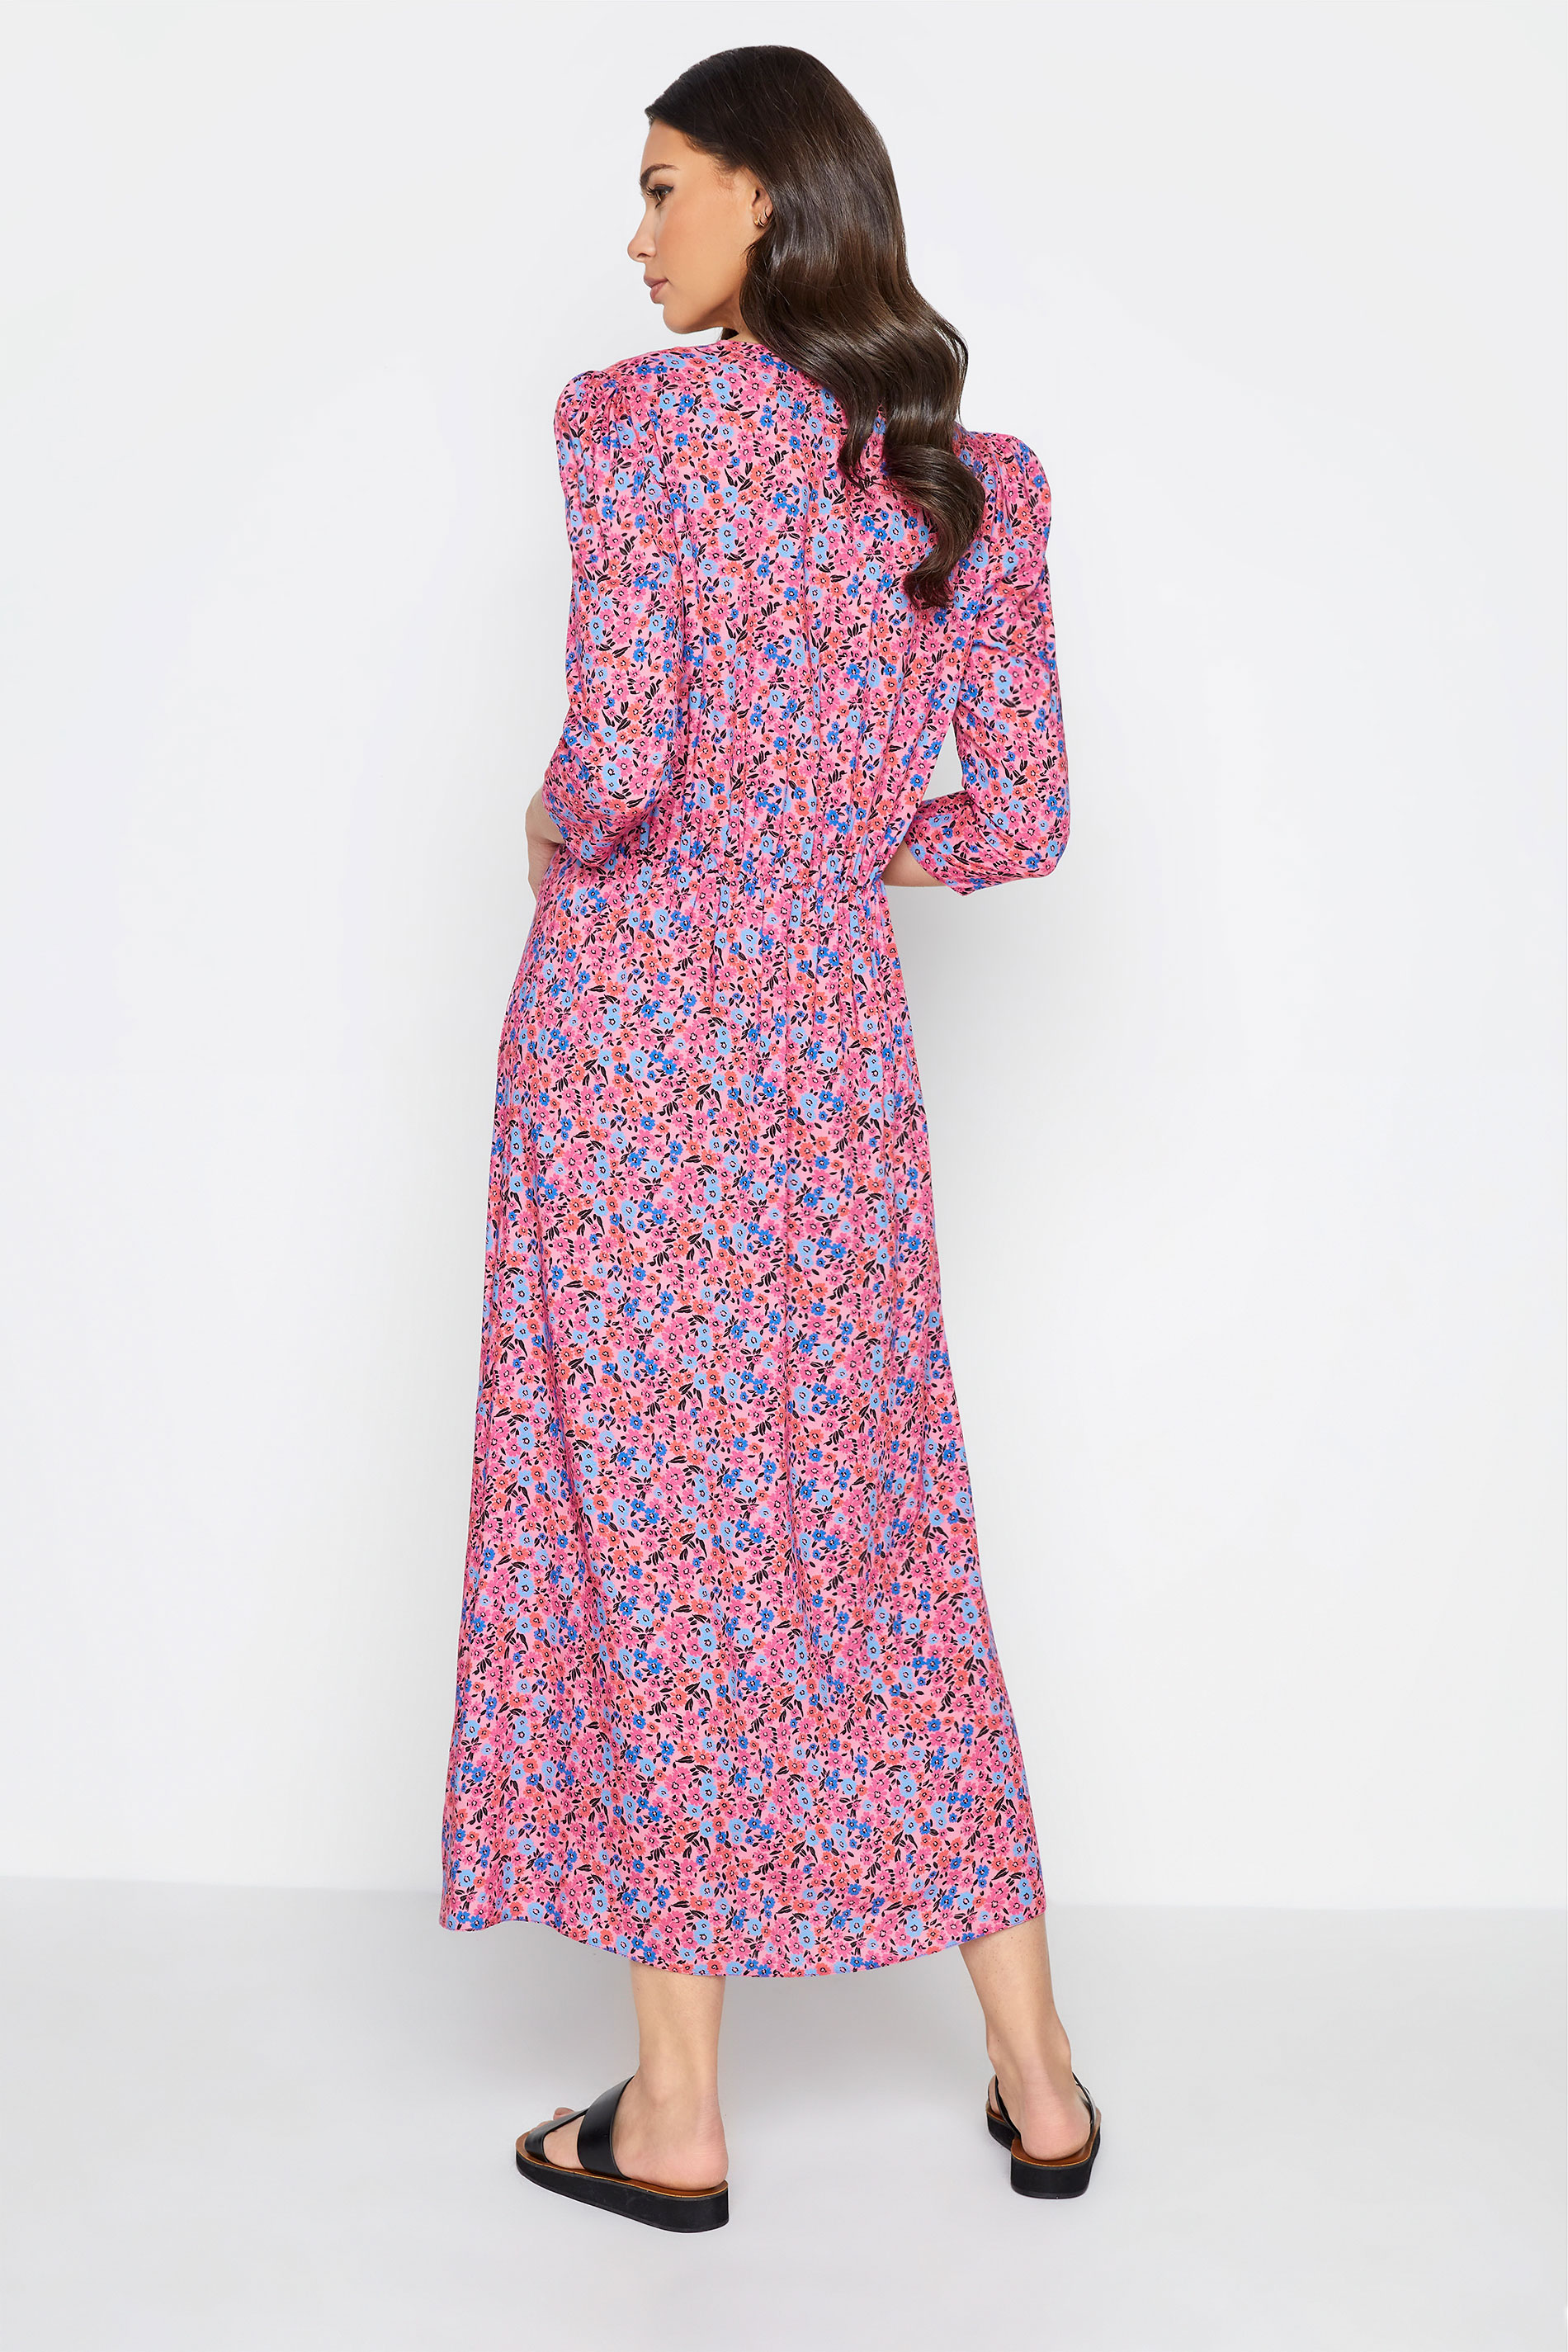 Tall Women's LTS Pink Ditsy Floral Tea Dress | Long Tall Sally 3